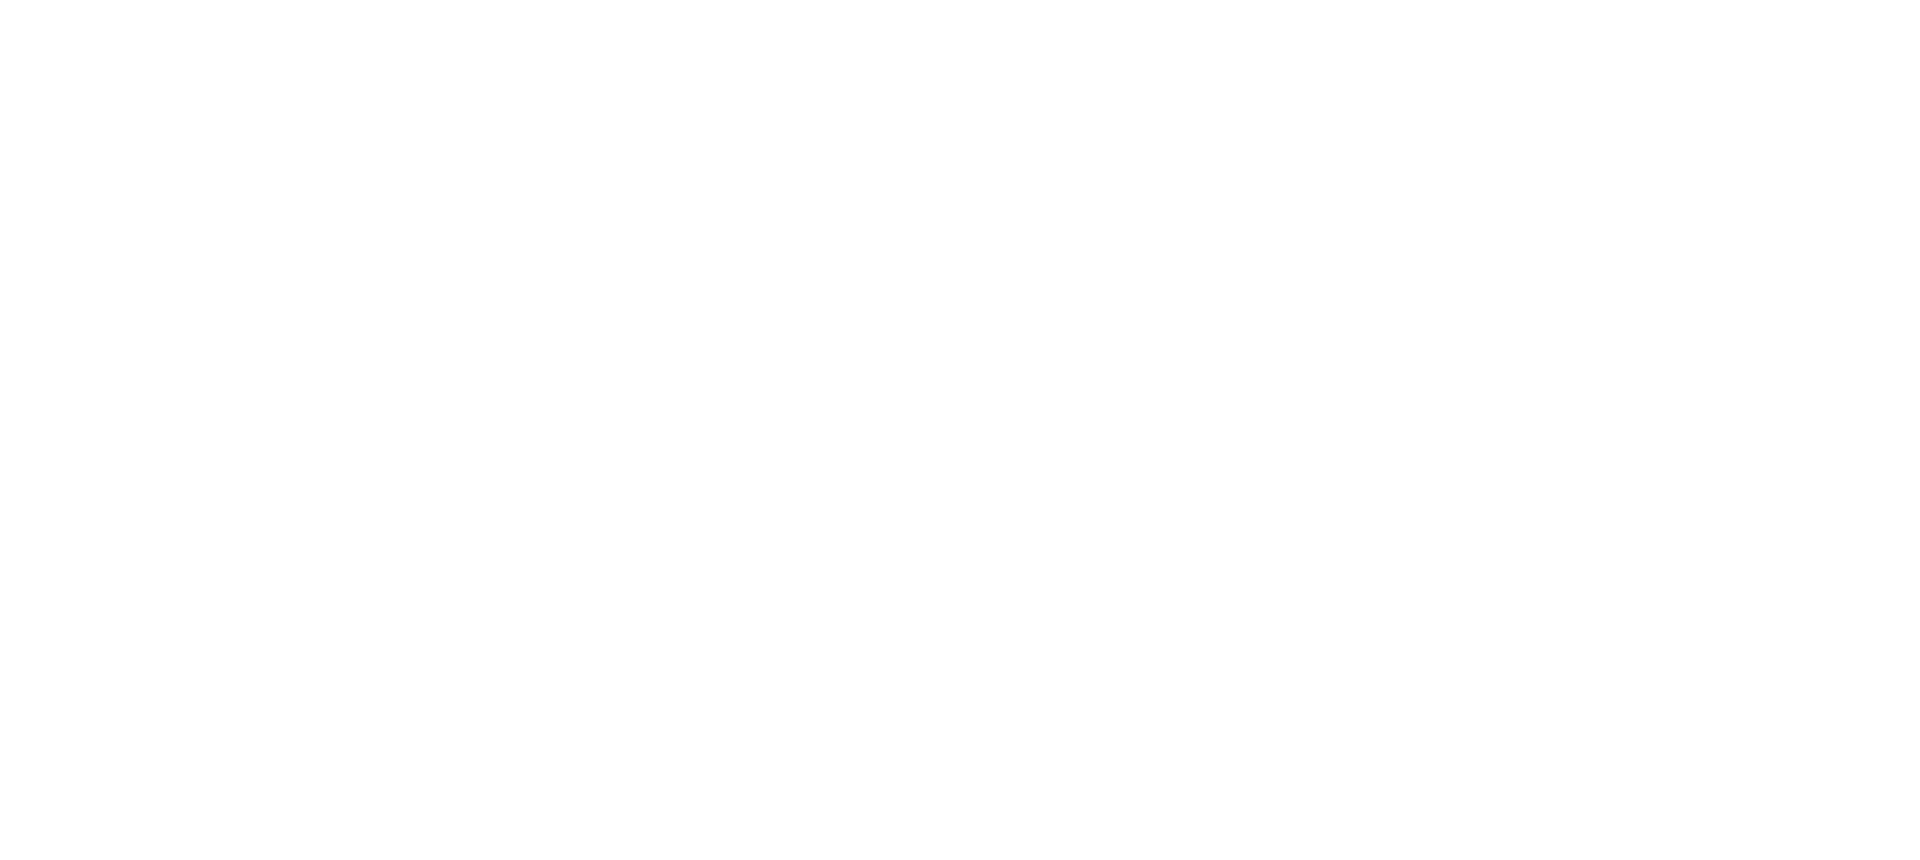 A B C D E | Impact environnement